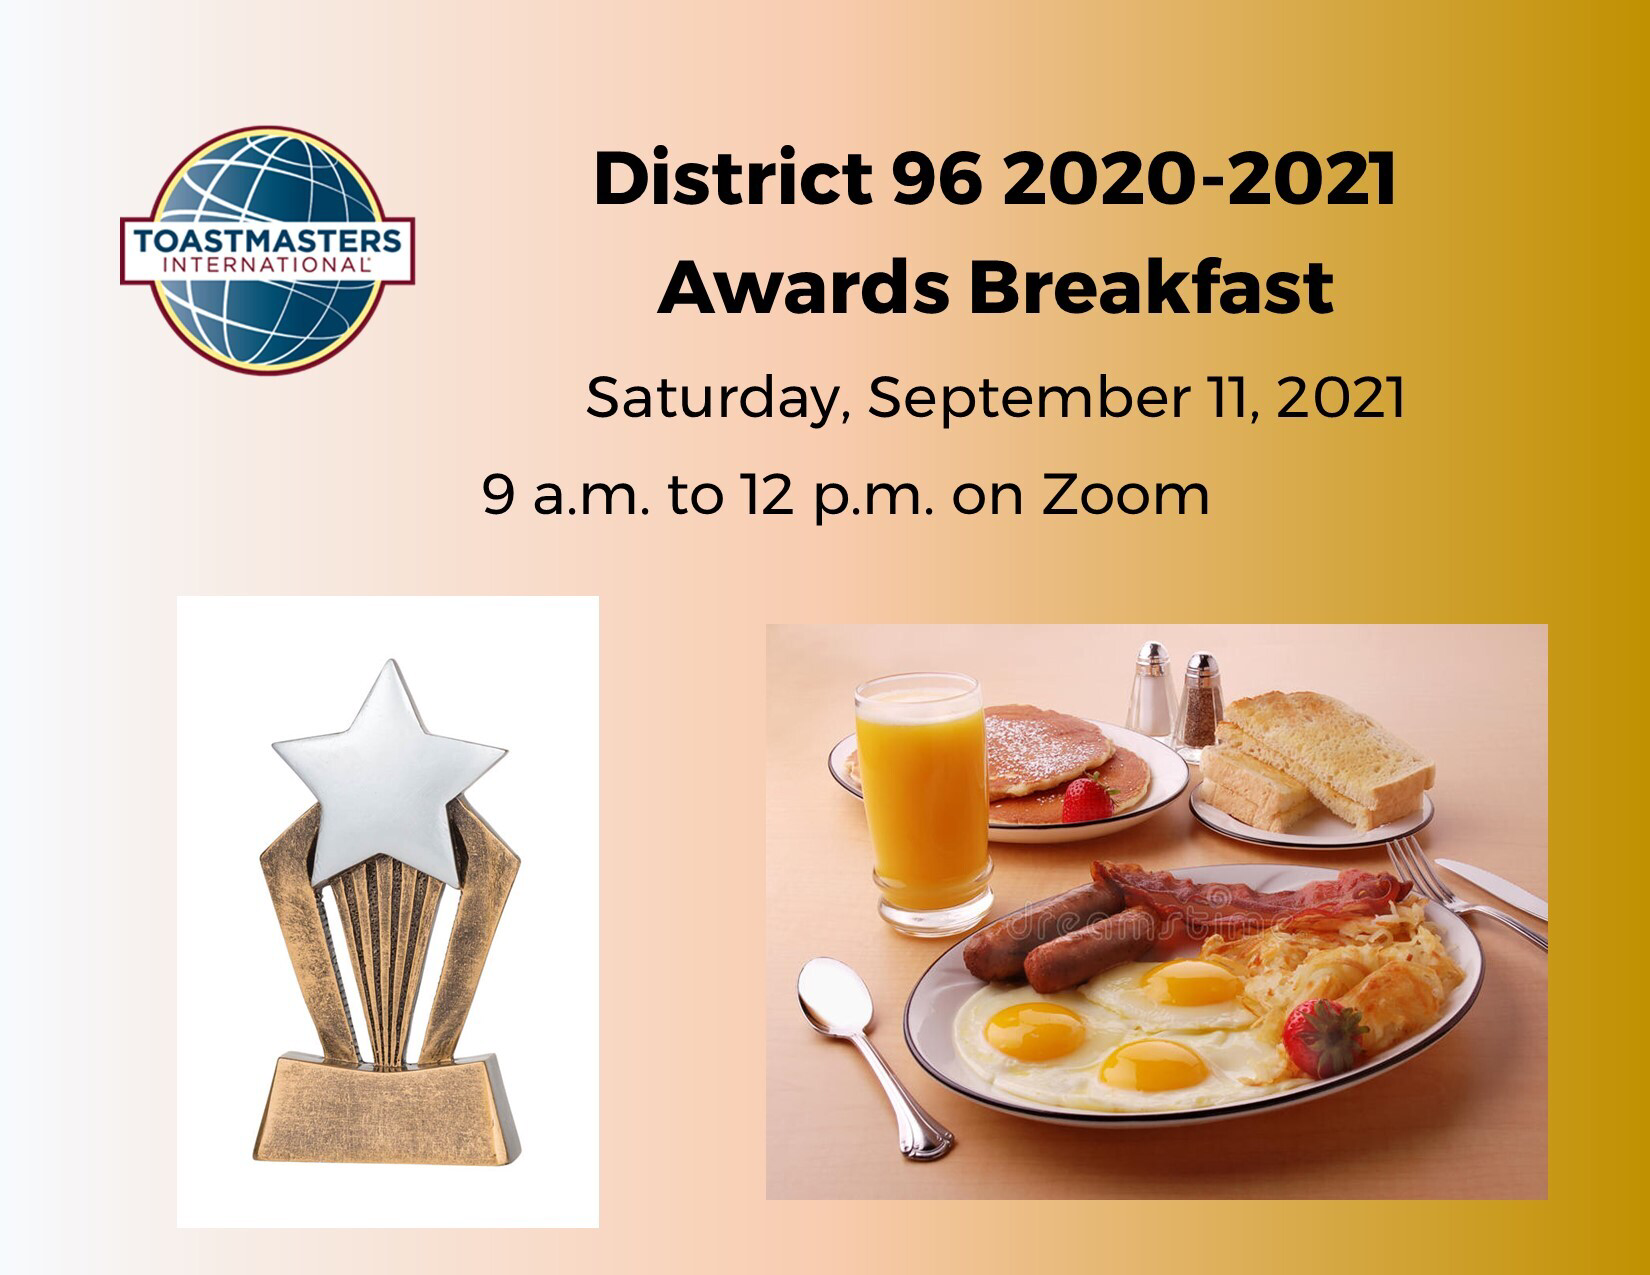 2020-2021 District Awards Breakfast Ceremony